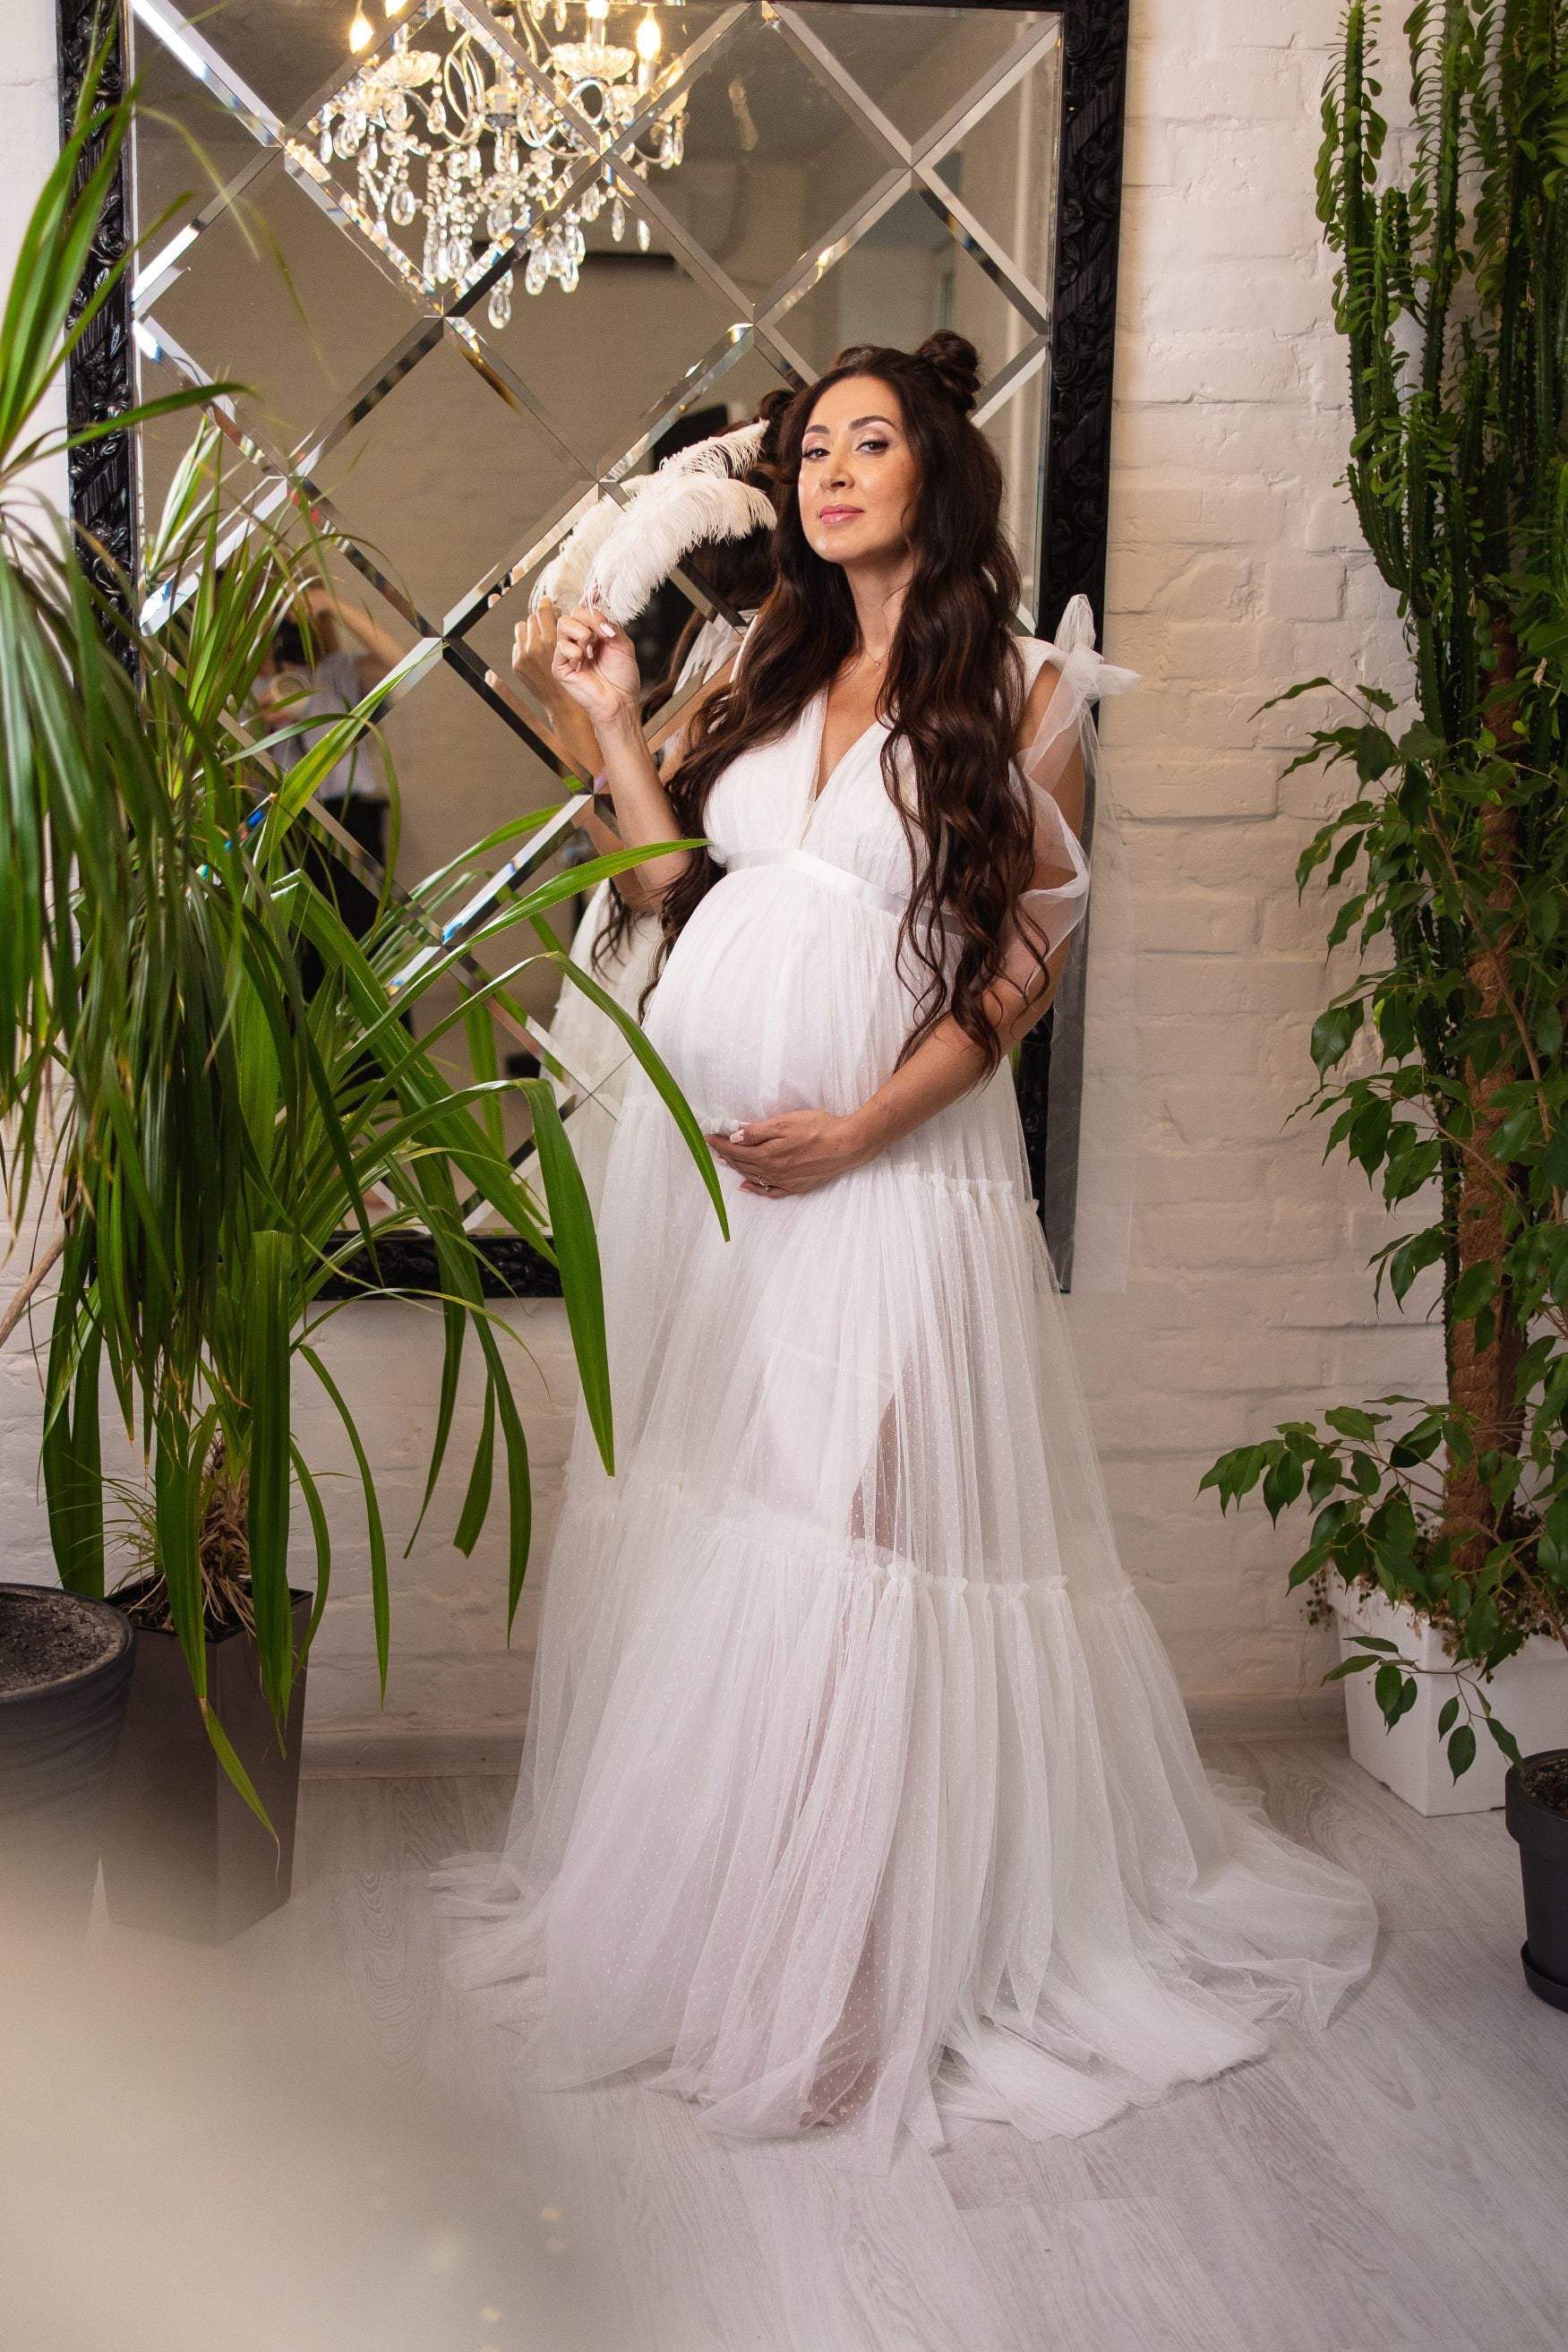 Boho Maternity Dress, White Maternity Photoshoot Dress, Empire Waist B